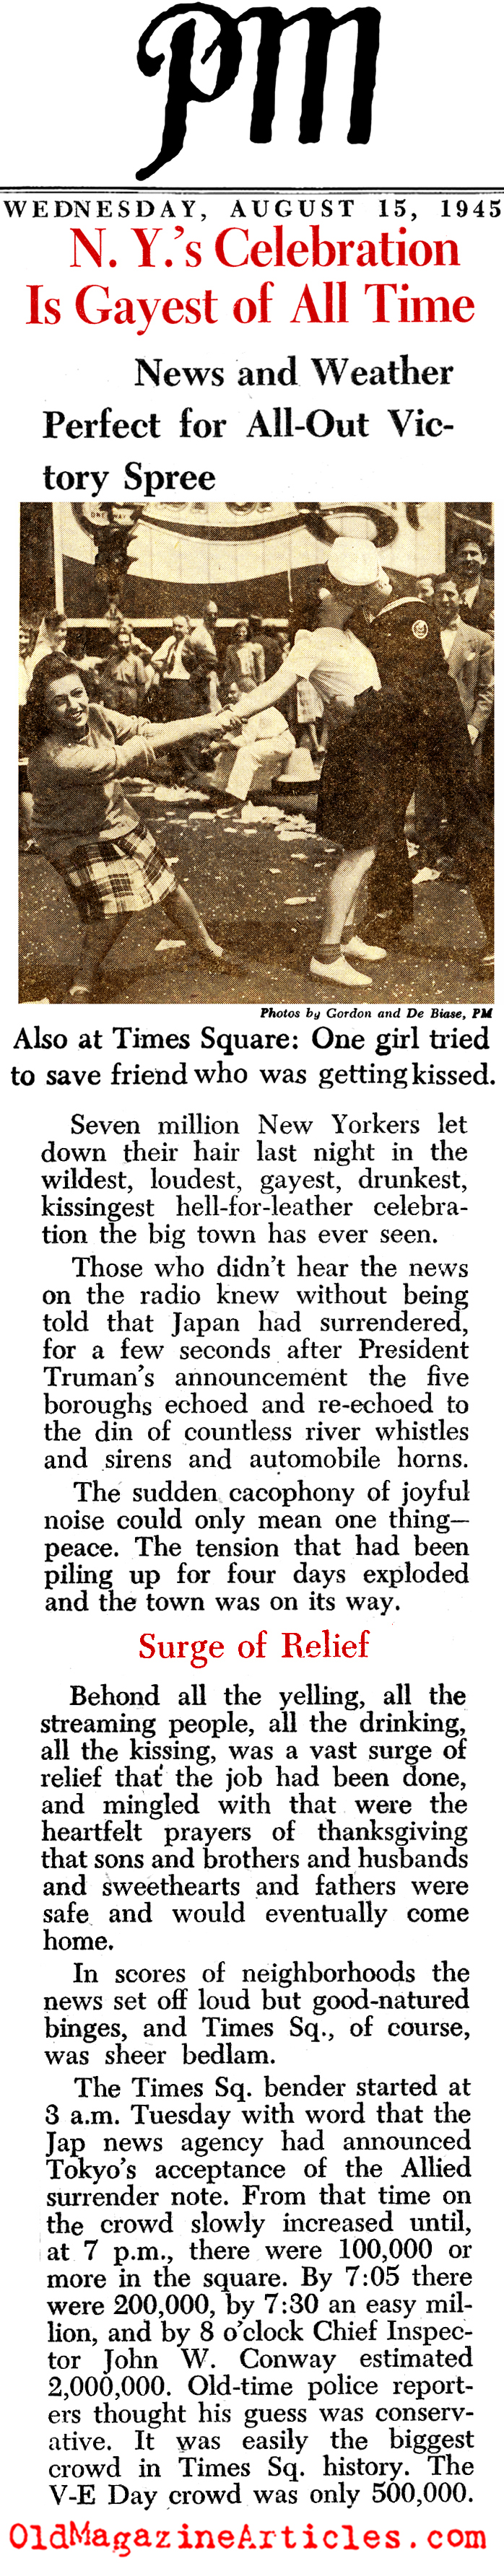 VJ-Day on New York City (PM Tabloid, 1945)